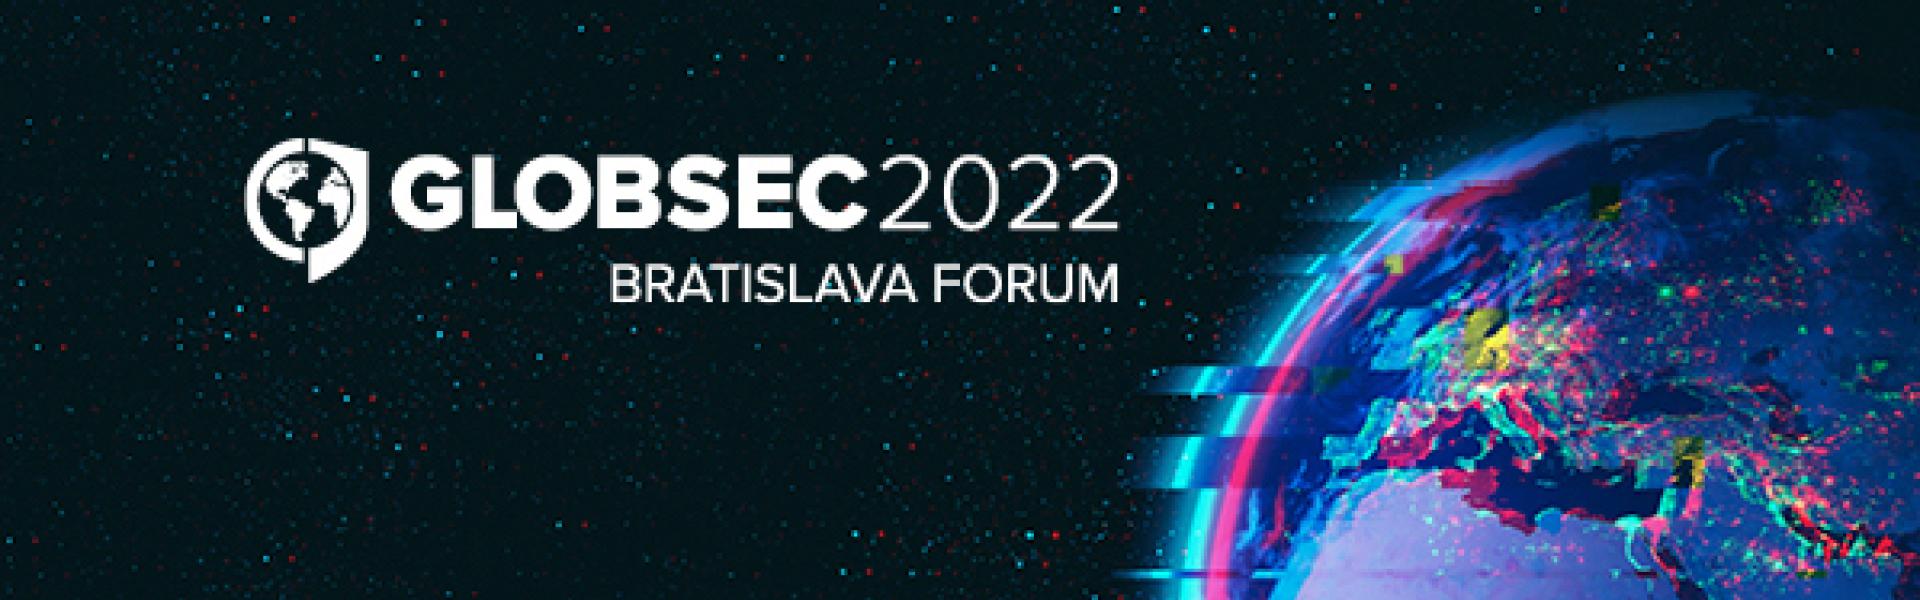 Globsec 2022 cropped banner